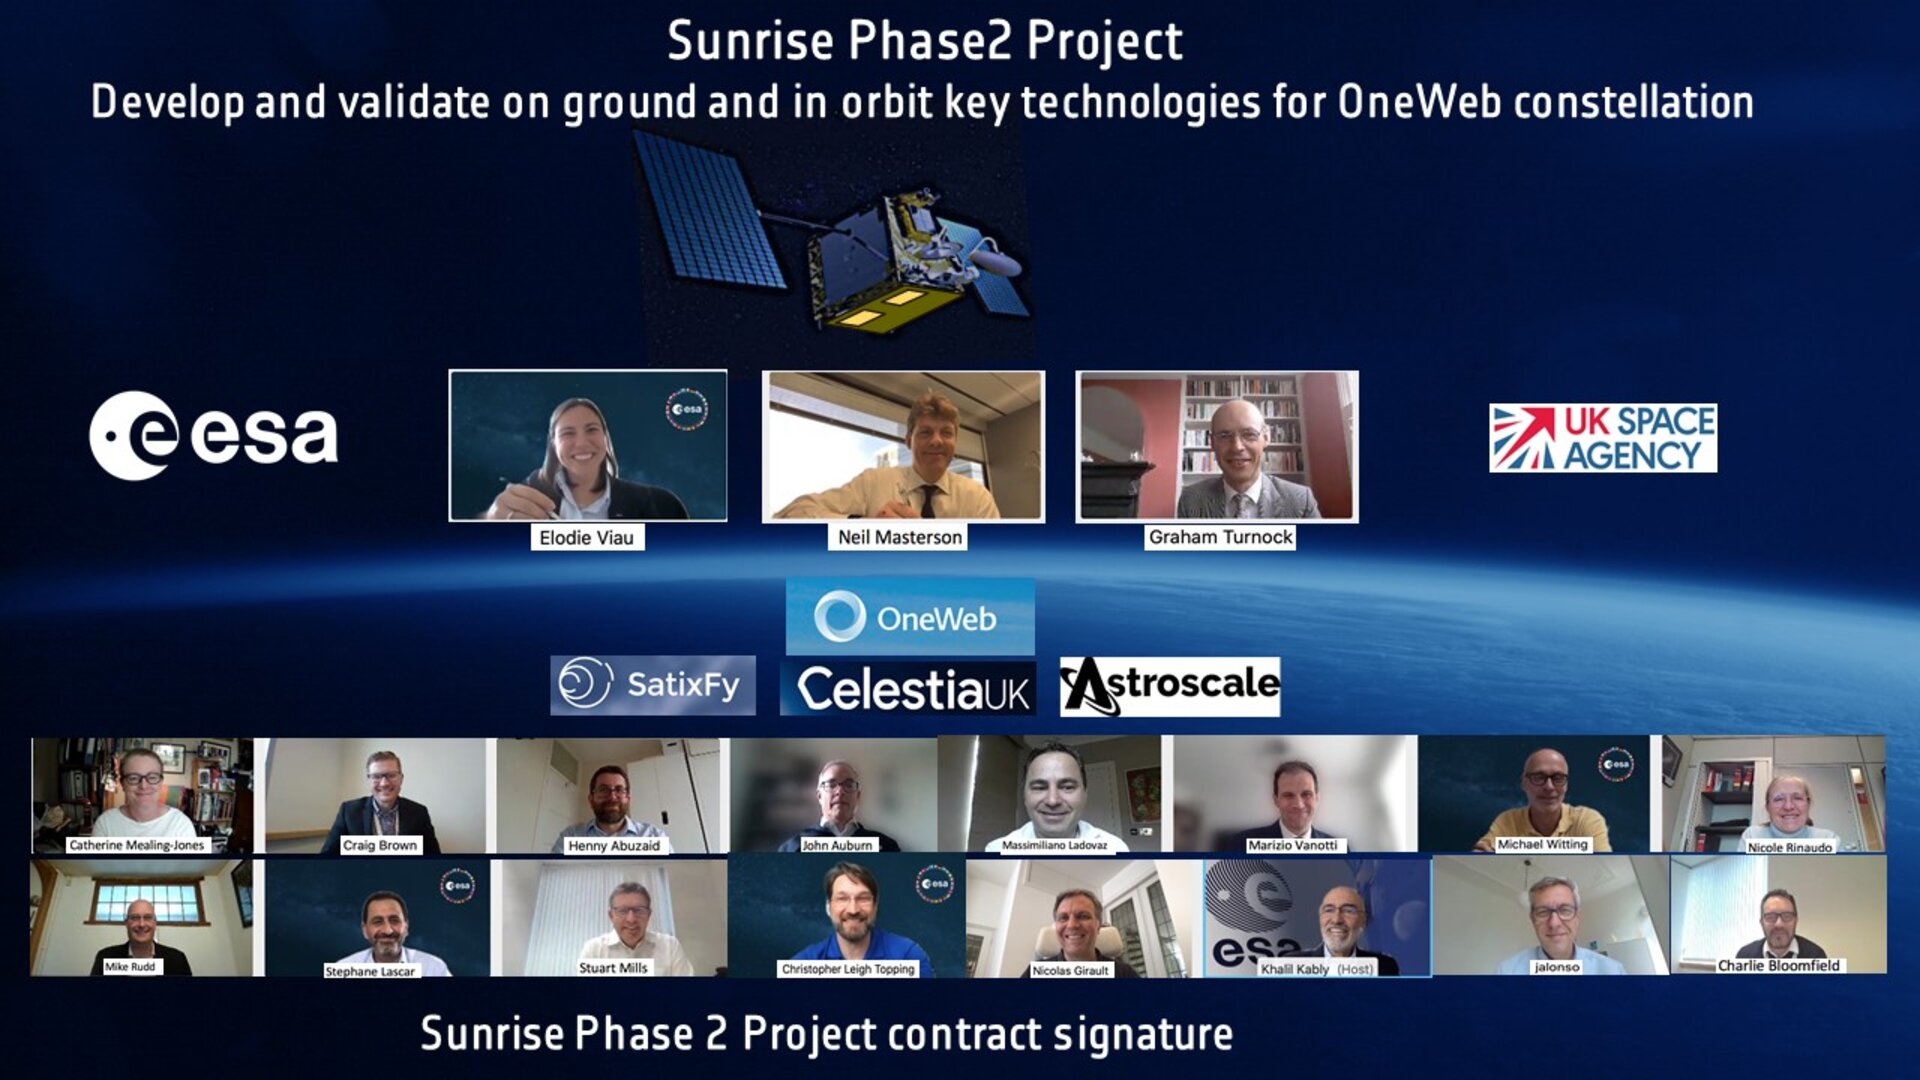 Sunrise contract virtual signature event